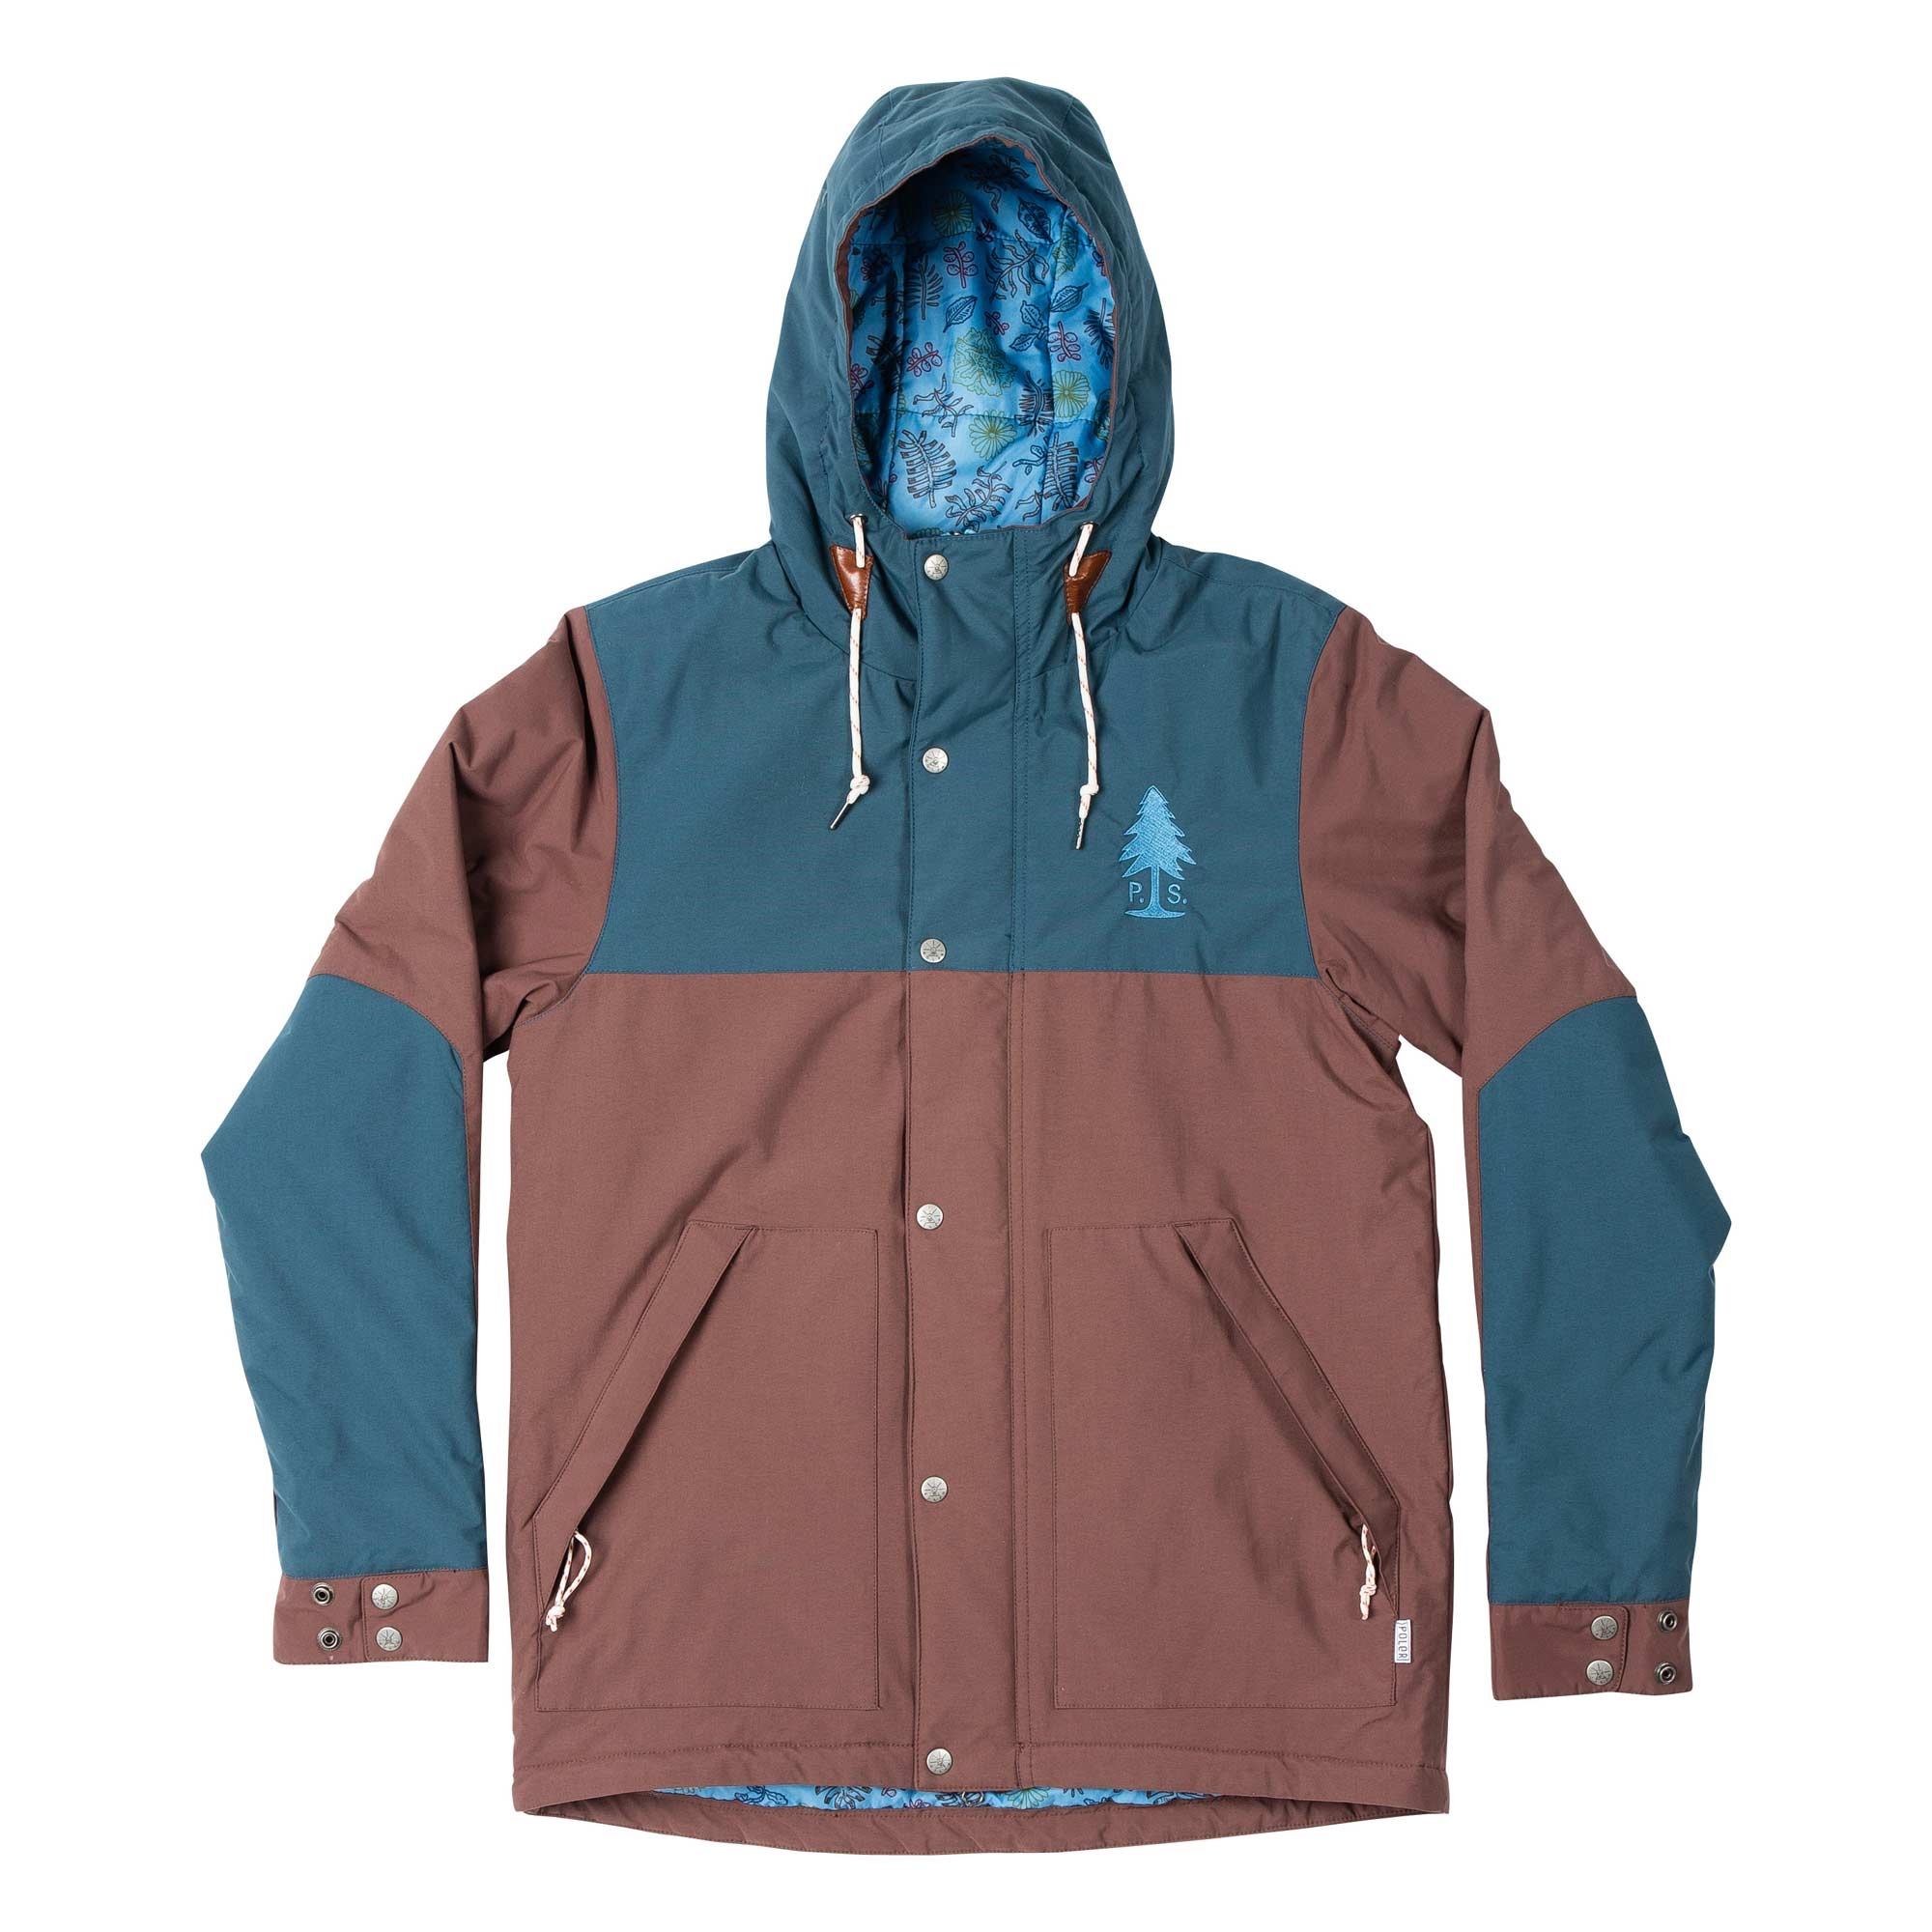 POLER Jacket SCOUT brown stone/blue steel